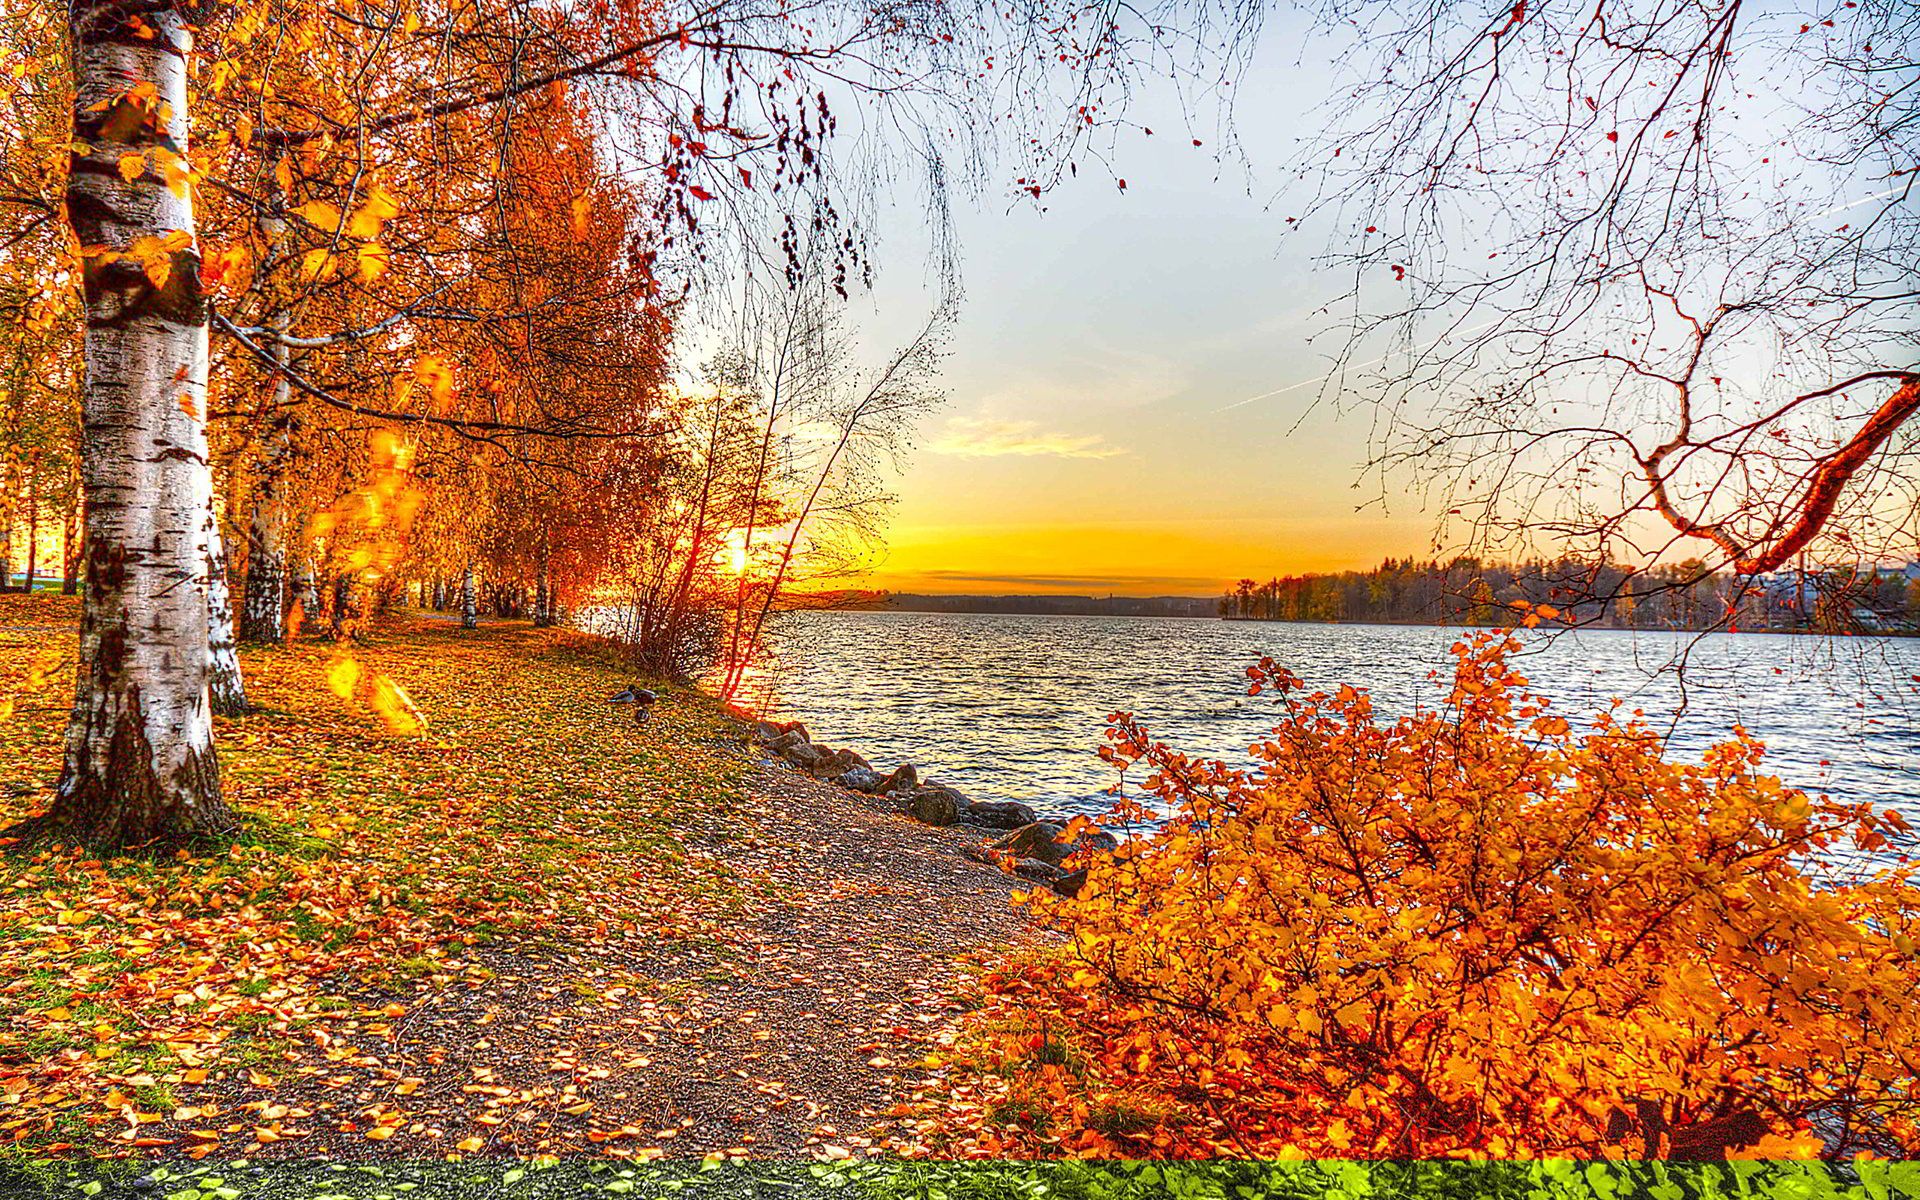 Autumn Wallpaper, Background, Image, Picture. Design Trends PSD, Vector Downloads. Autumn lake, Landscape, Lake sunset